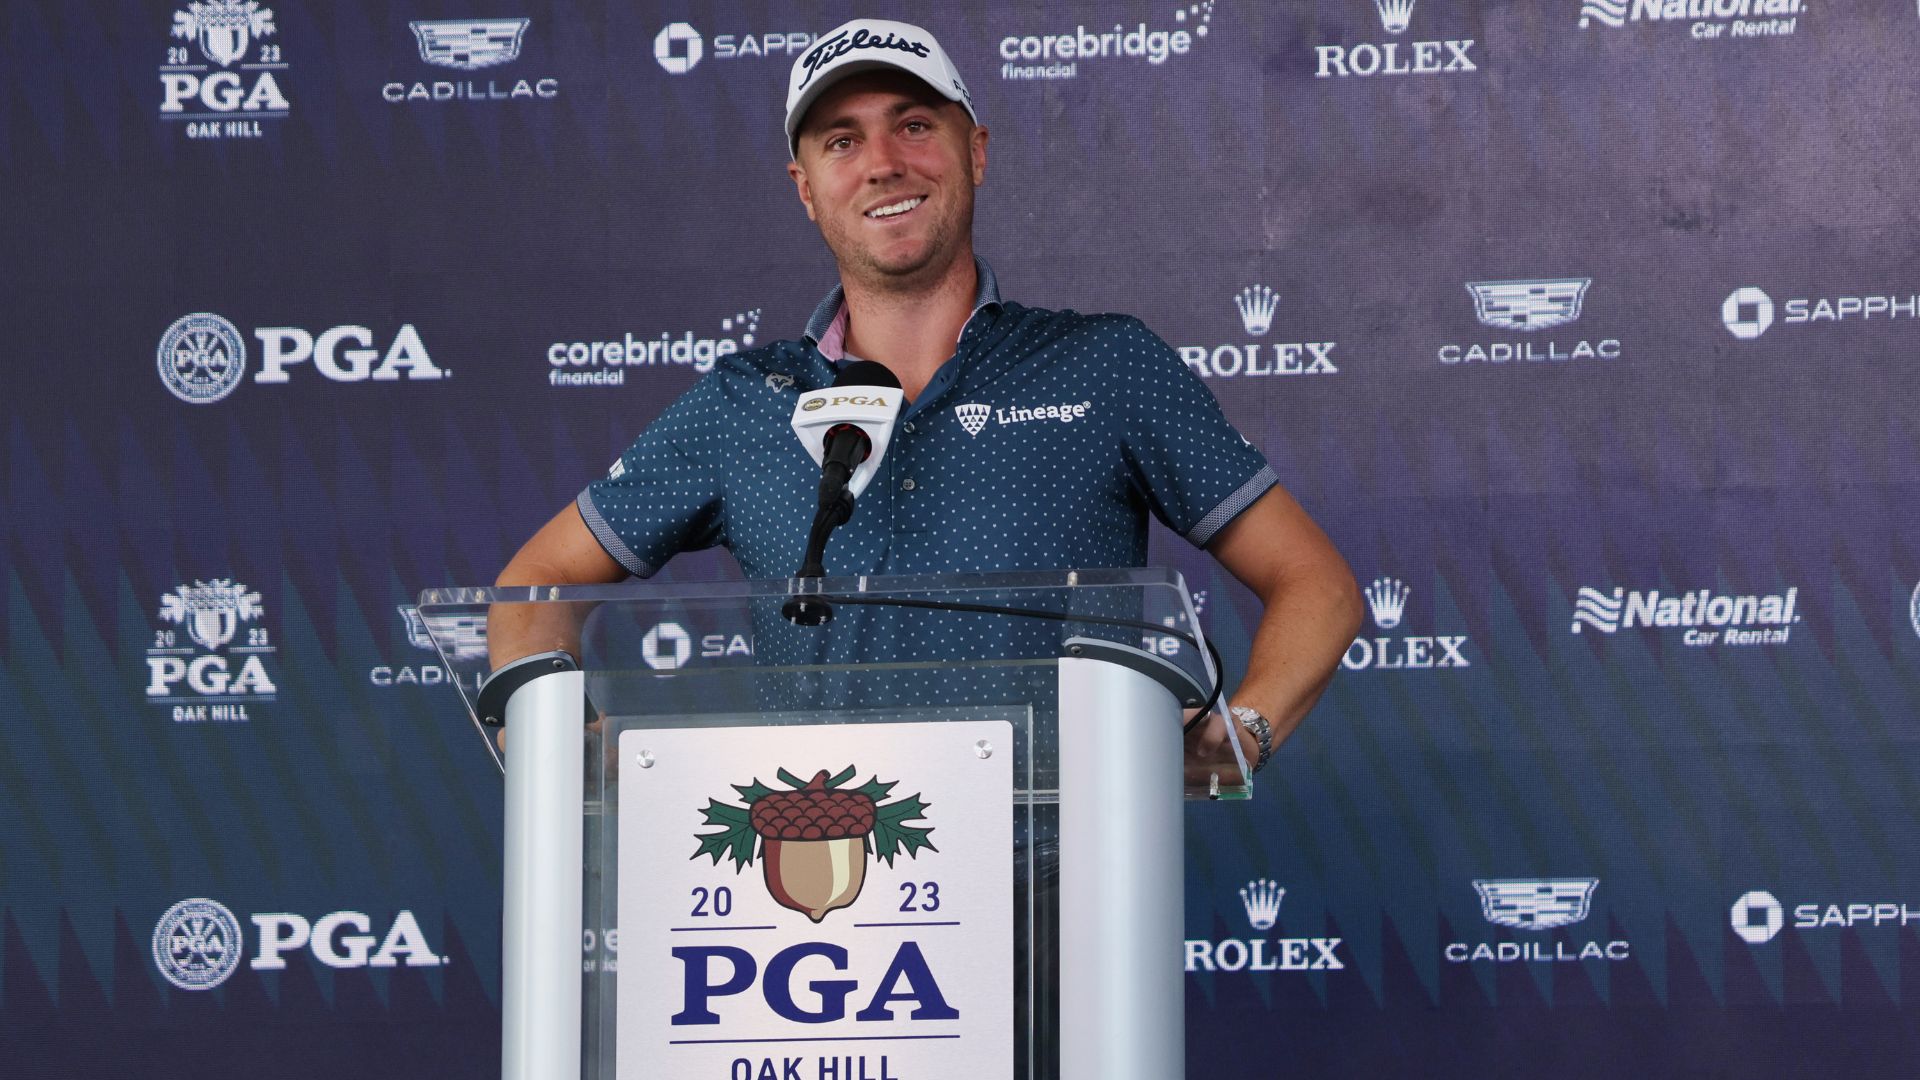 Justin Thomas’ game ‘never felt so far and so close’ at same time ahead of PGA Championship defense